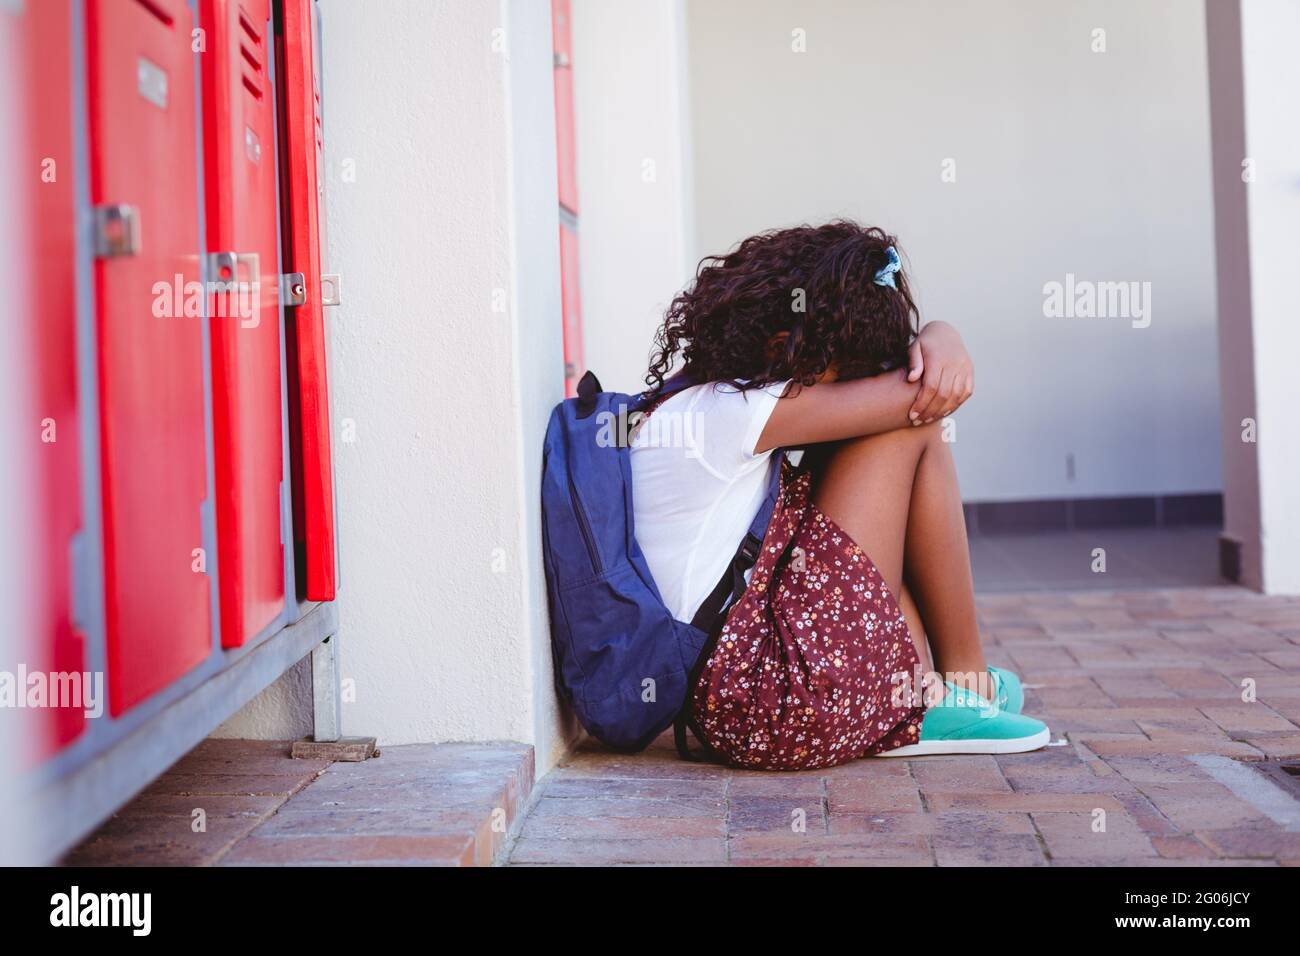 Unhappy african american schoolgirl sitting by lockers in school corridor with schoolbag Stock Photo